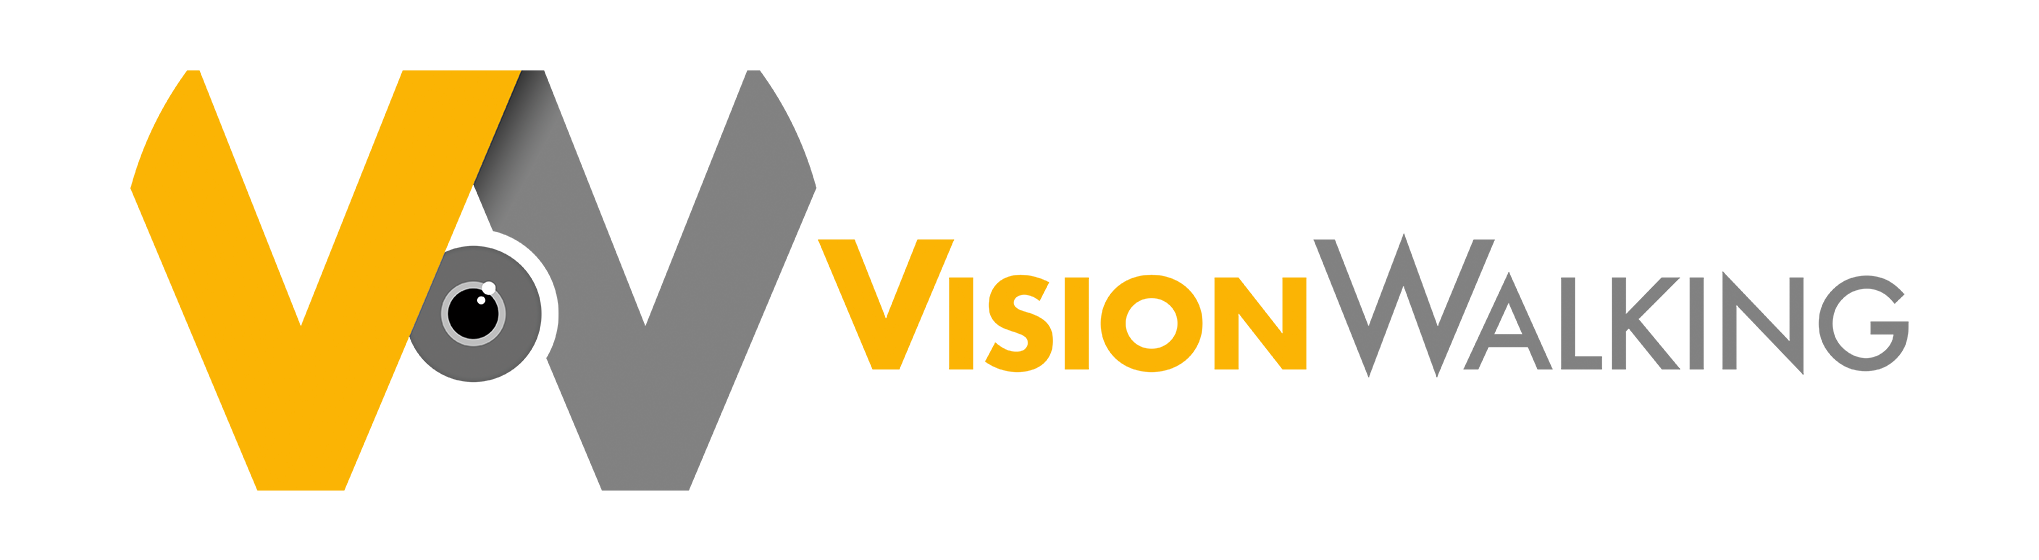 Vision Walking